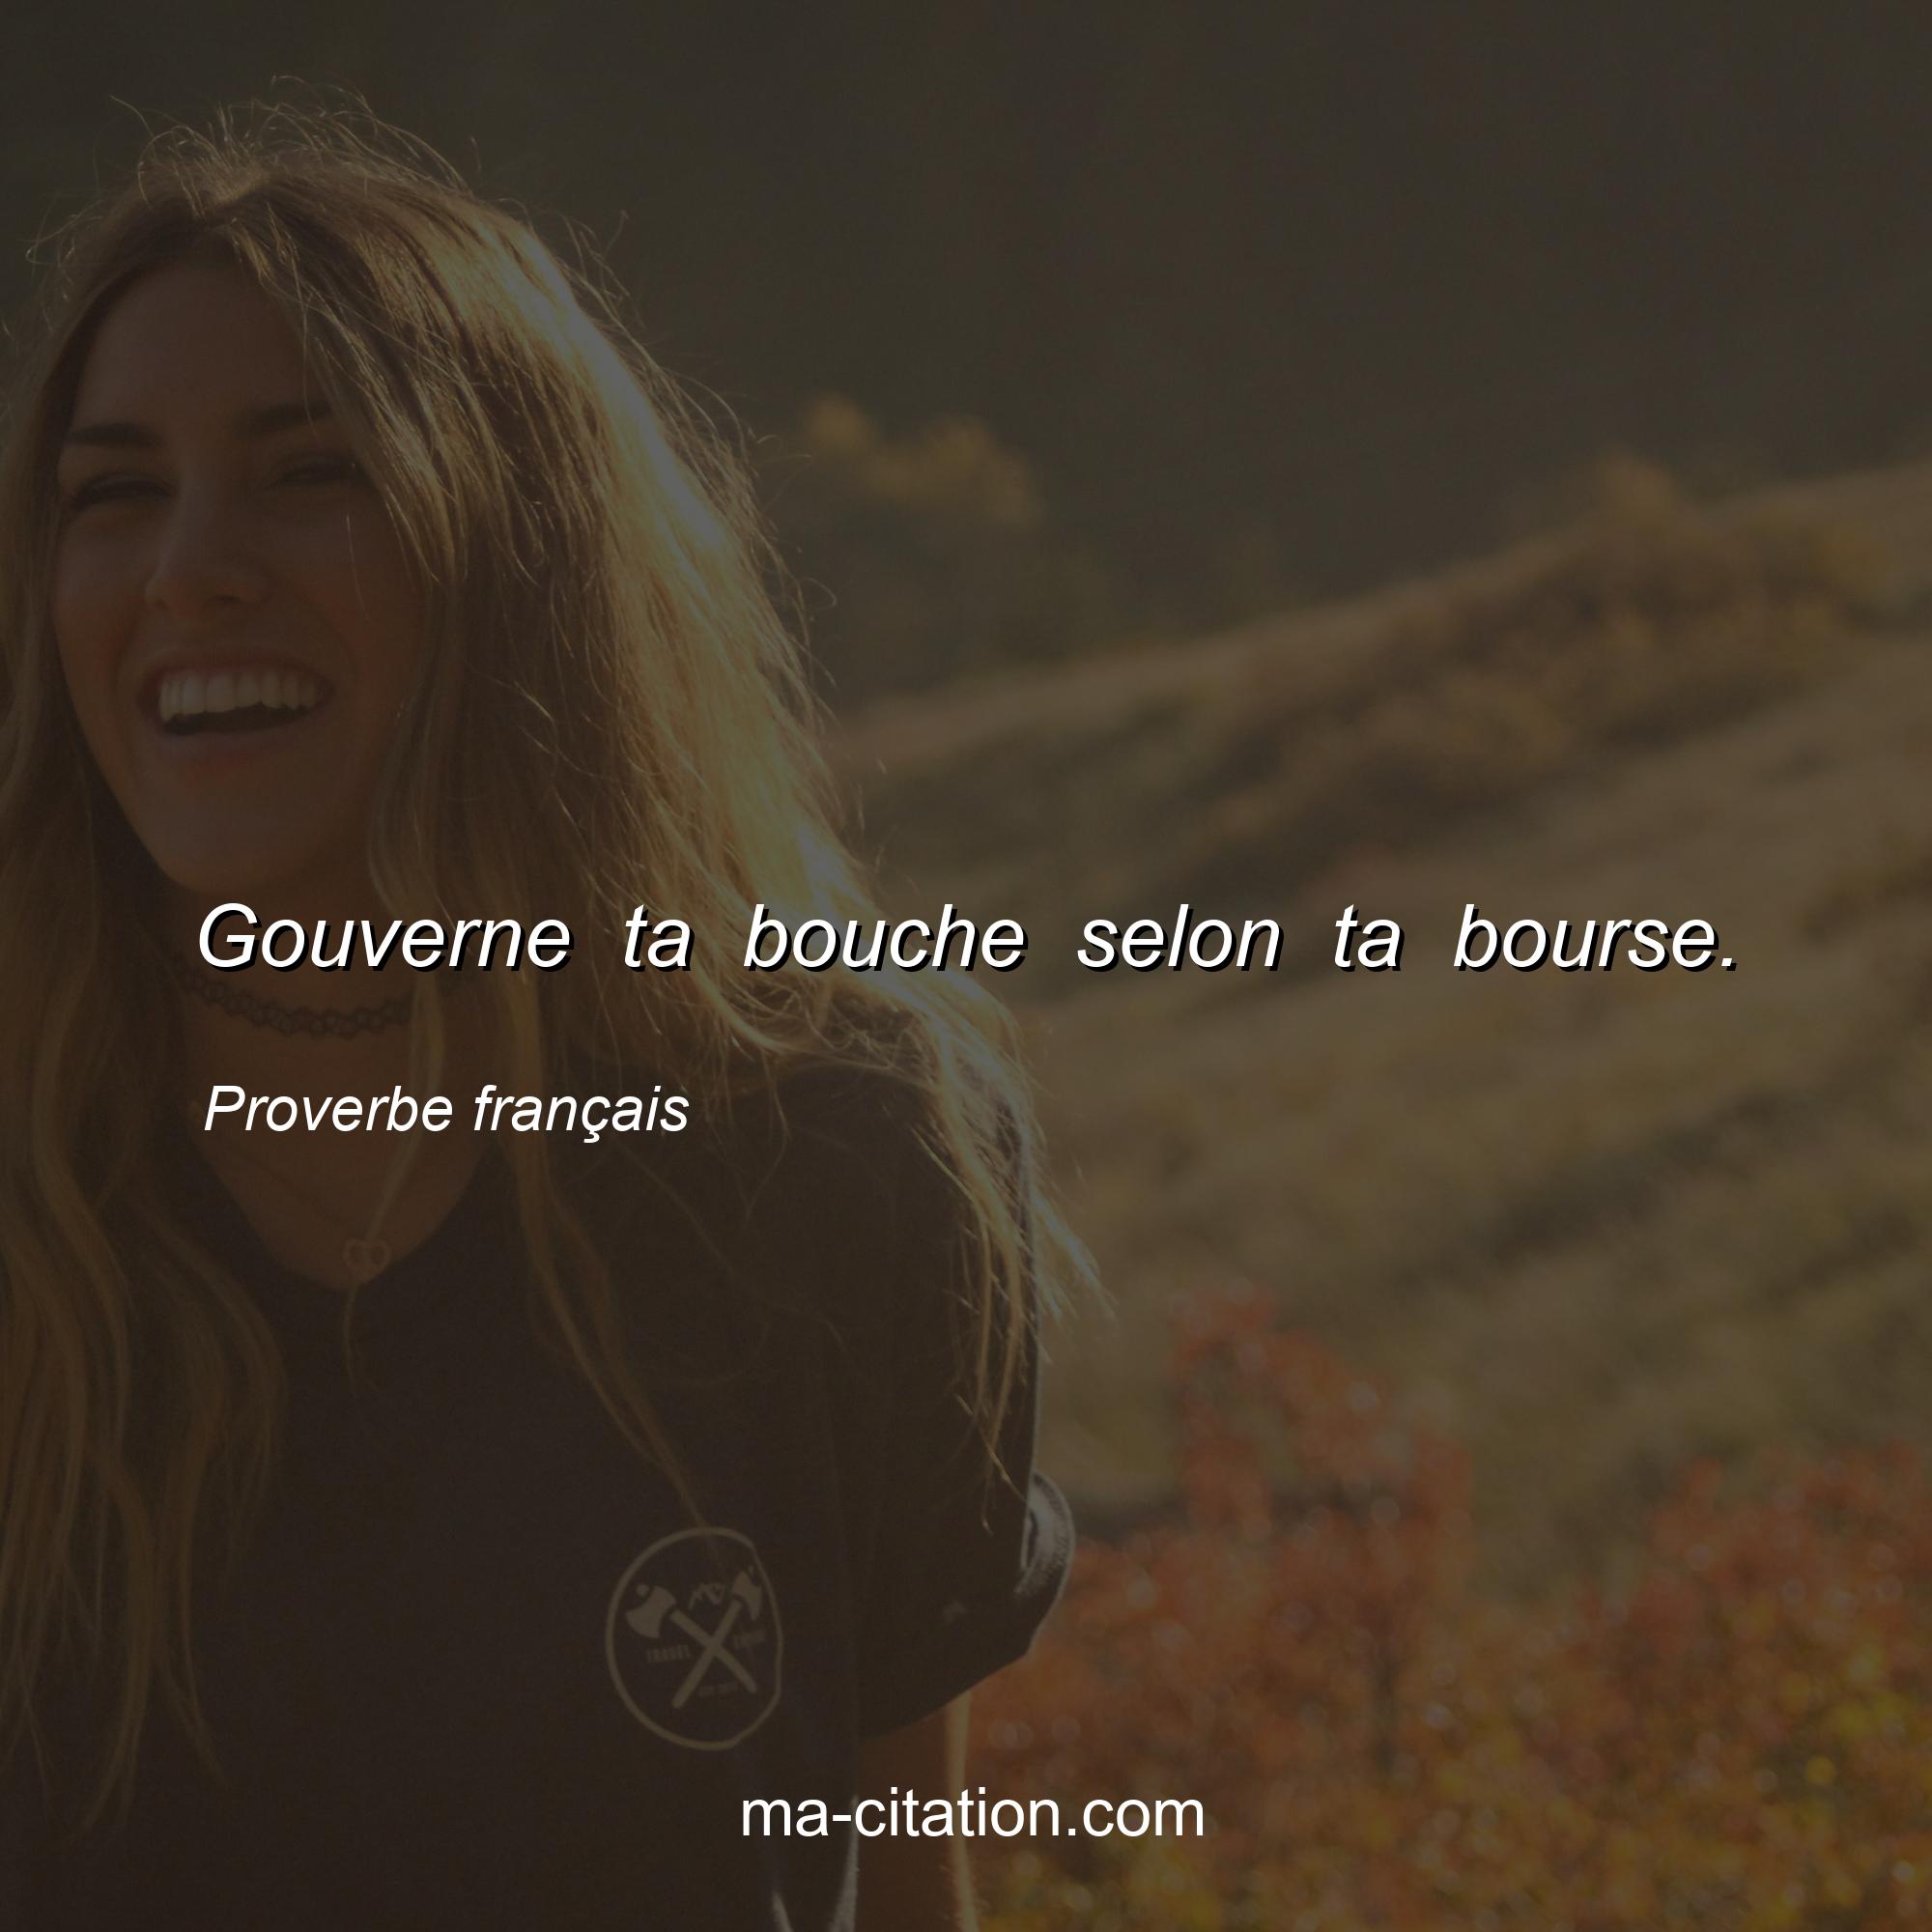 Proverbe français : Gouverne ta bouche selon ta bourse.